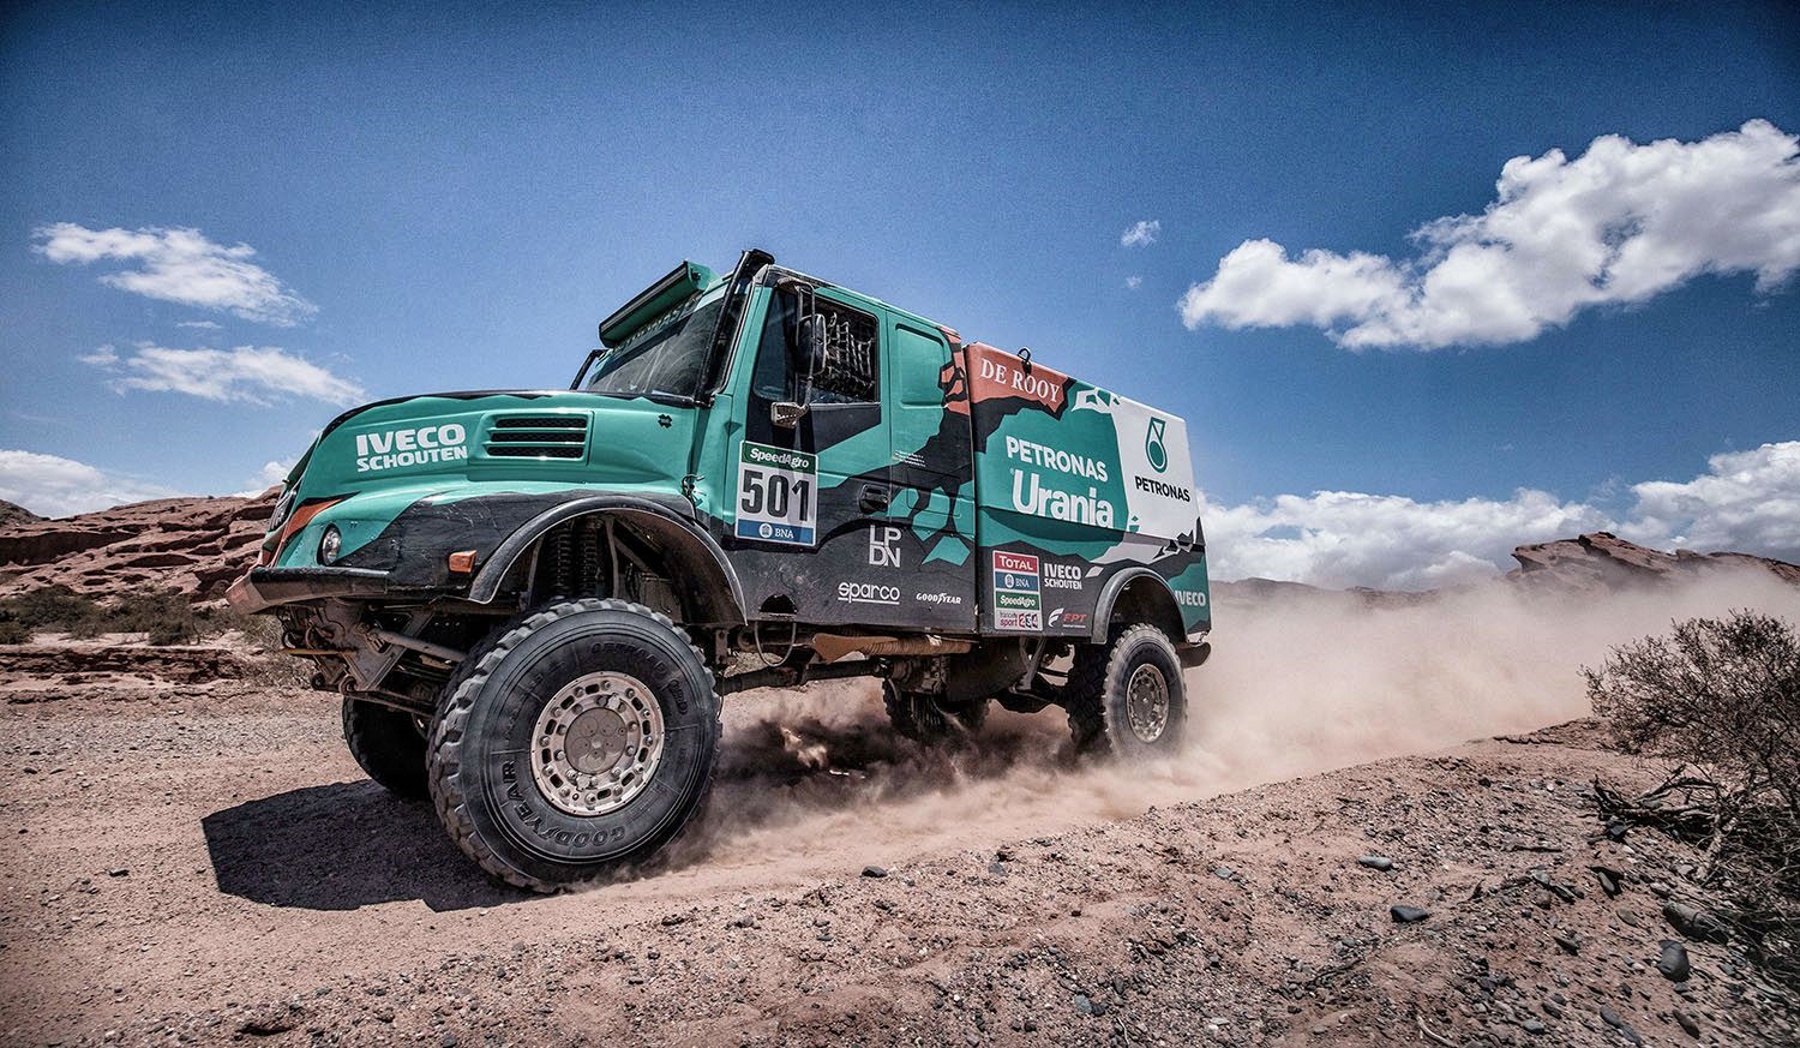 Dakar 2016 winners used Goodyear tyres